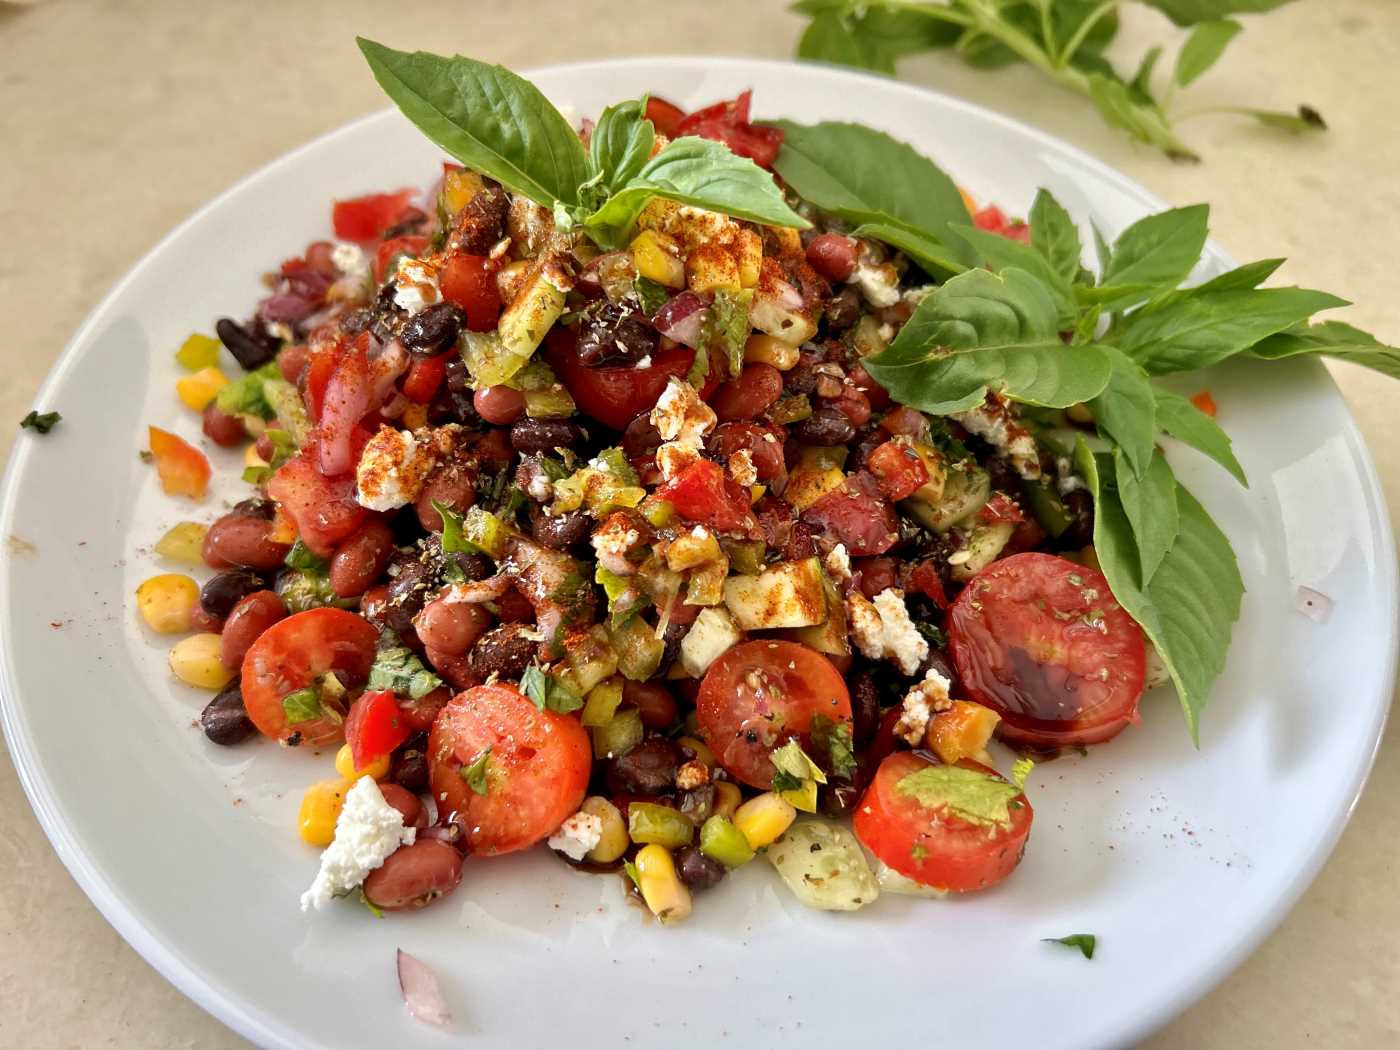 ELaiolithos' Vegetarian Salad